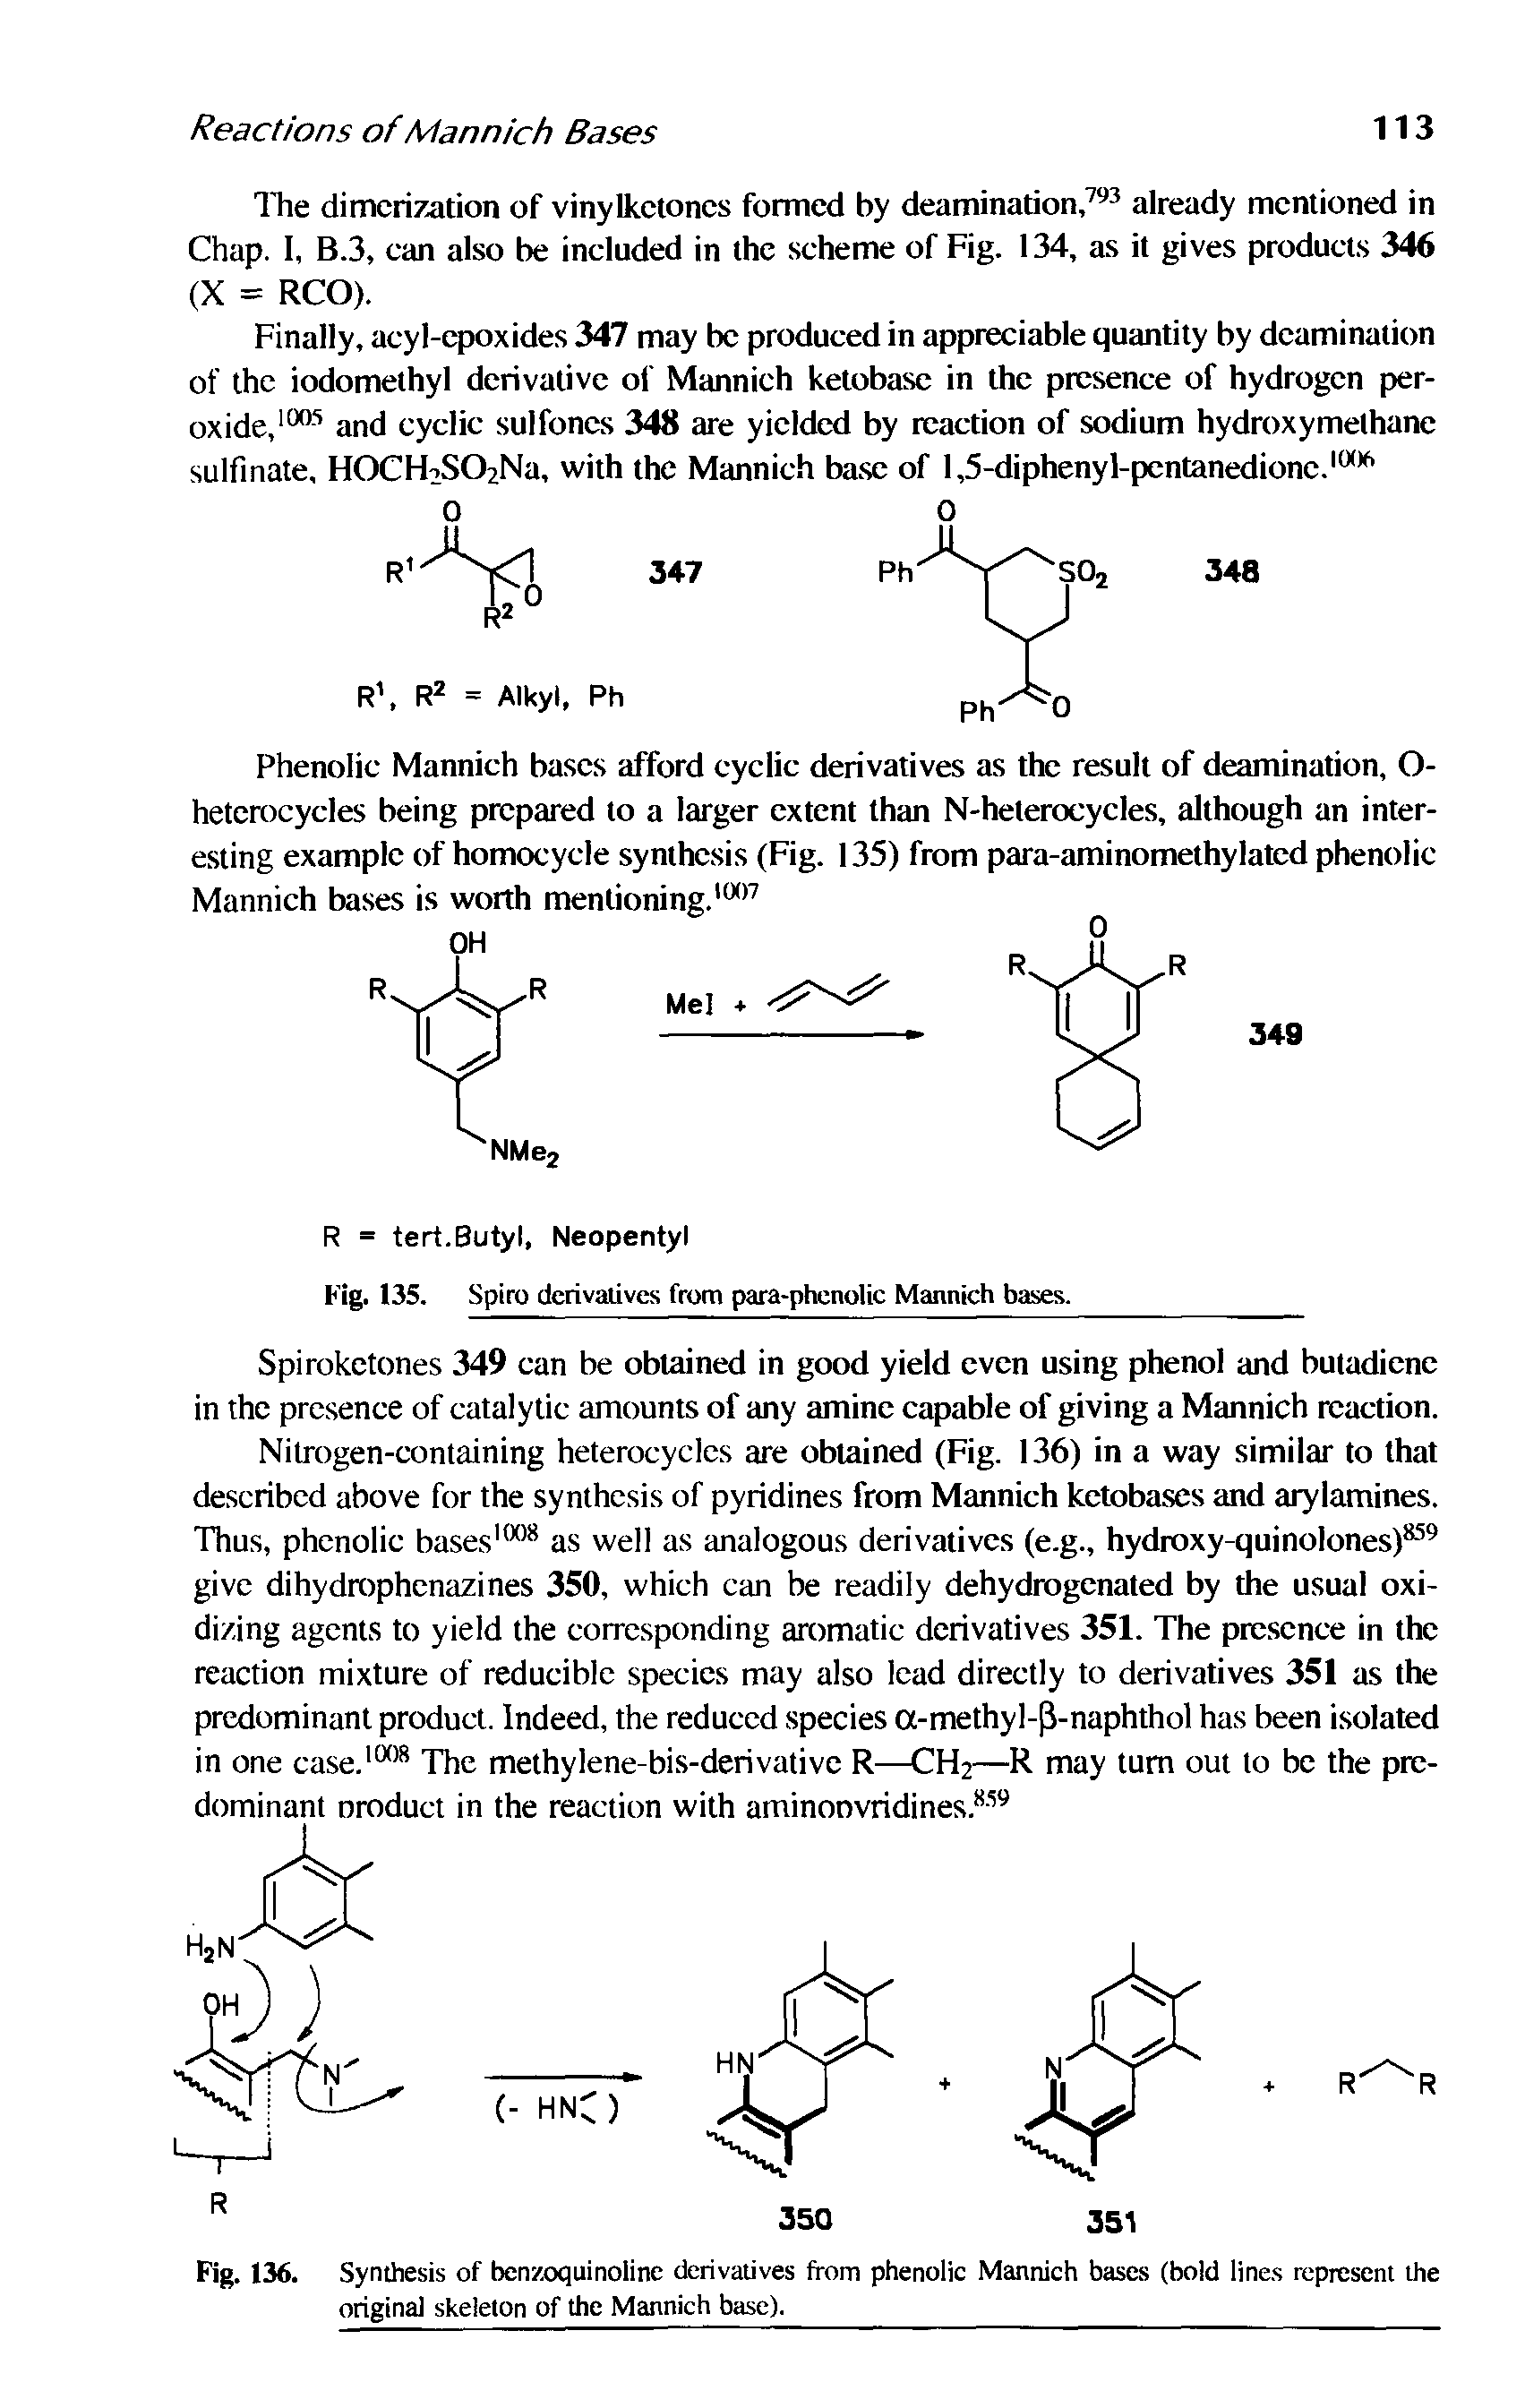 Fig. 135. Spiro derivalives from para-phenolic Mannich bases.